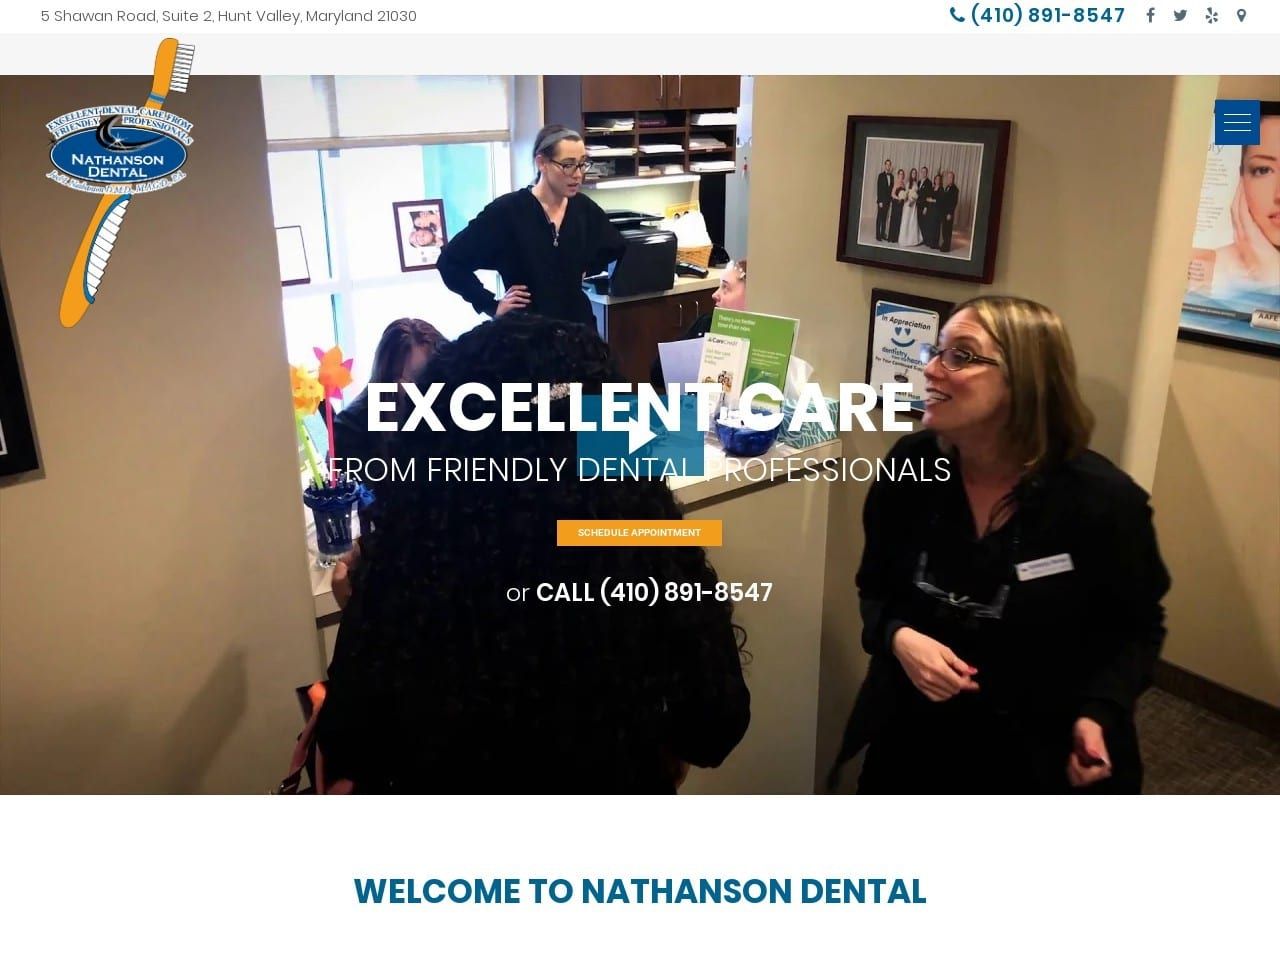 Nathanson Dental Website Screenshot from nathansondental.com